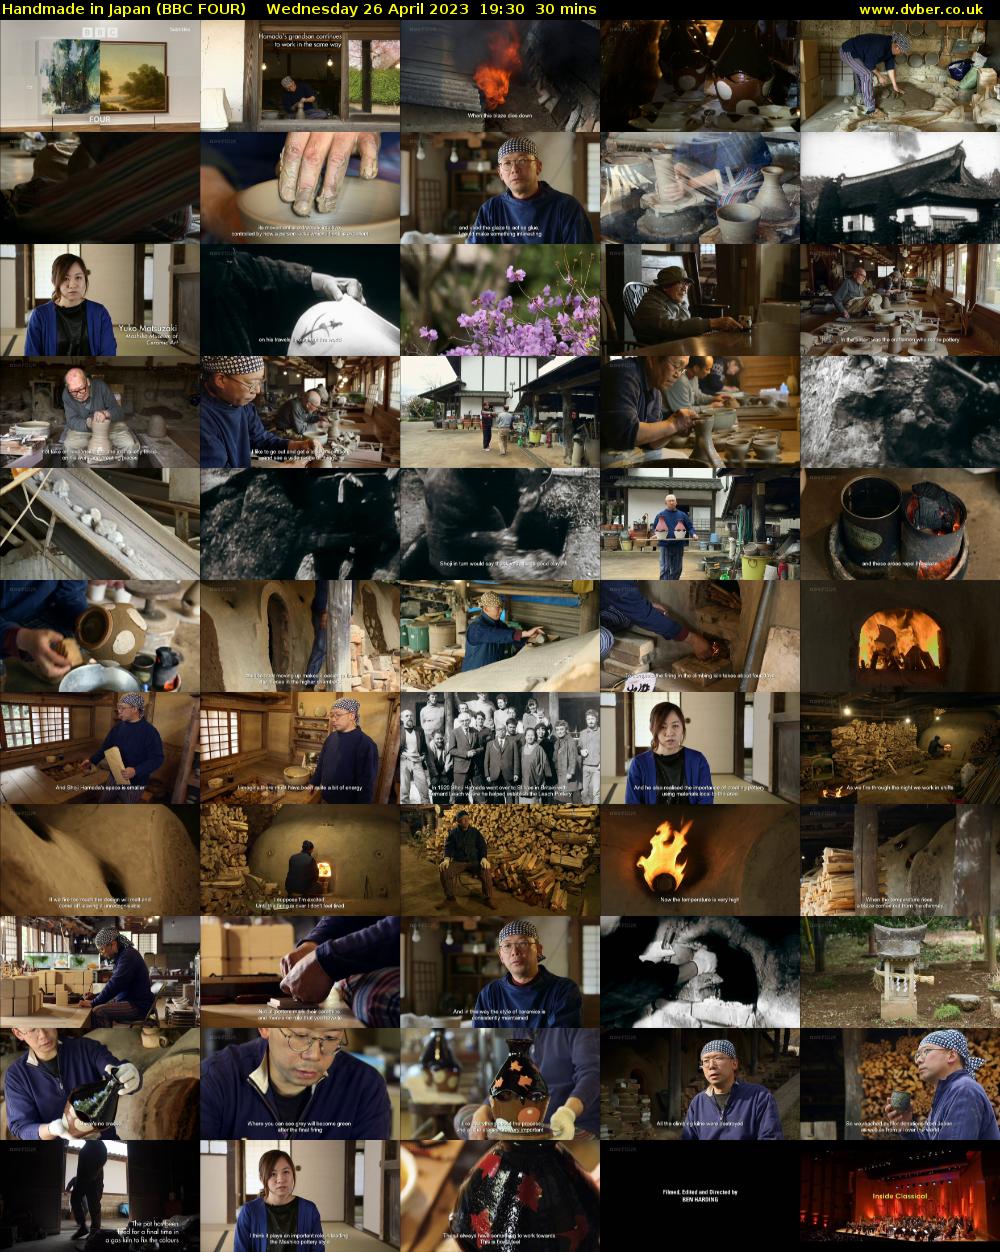 Handmade in Japan (BBC FOUR) Wednesday 26 April 2023 19:30 - 20:00